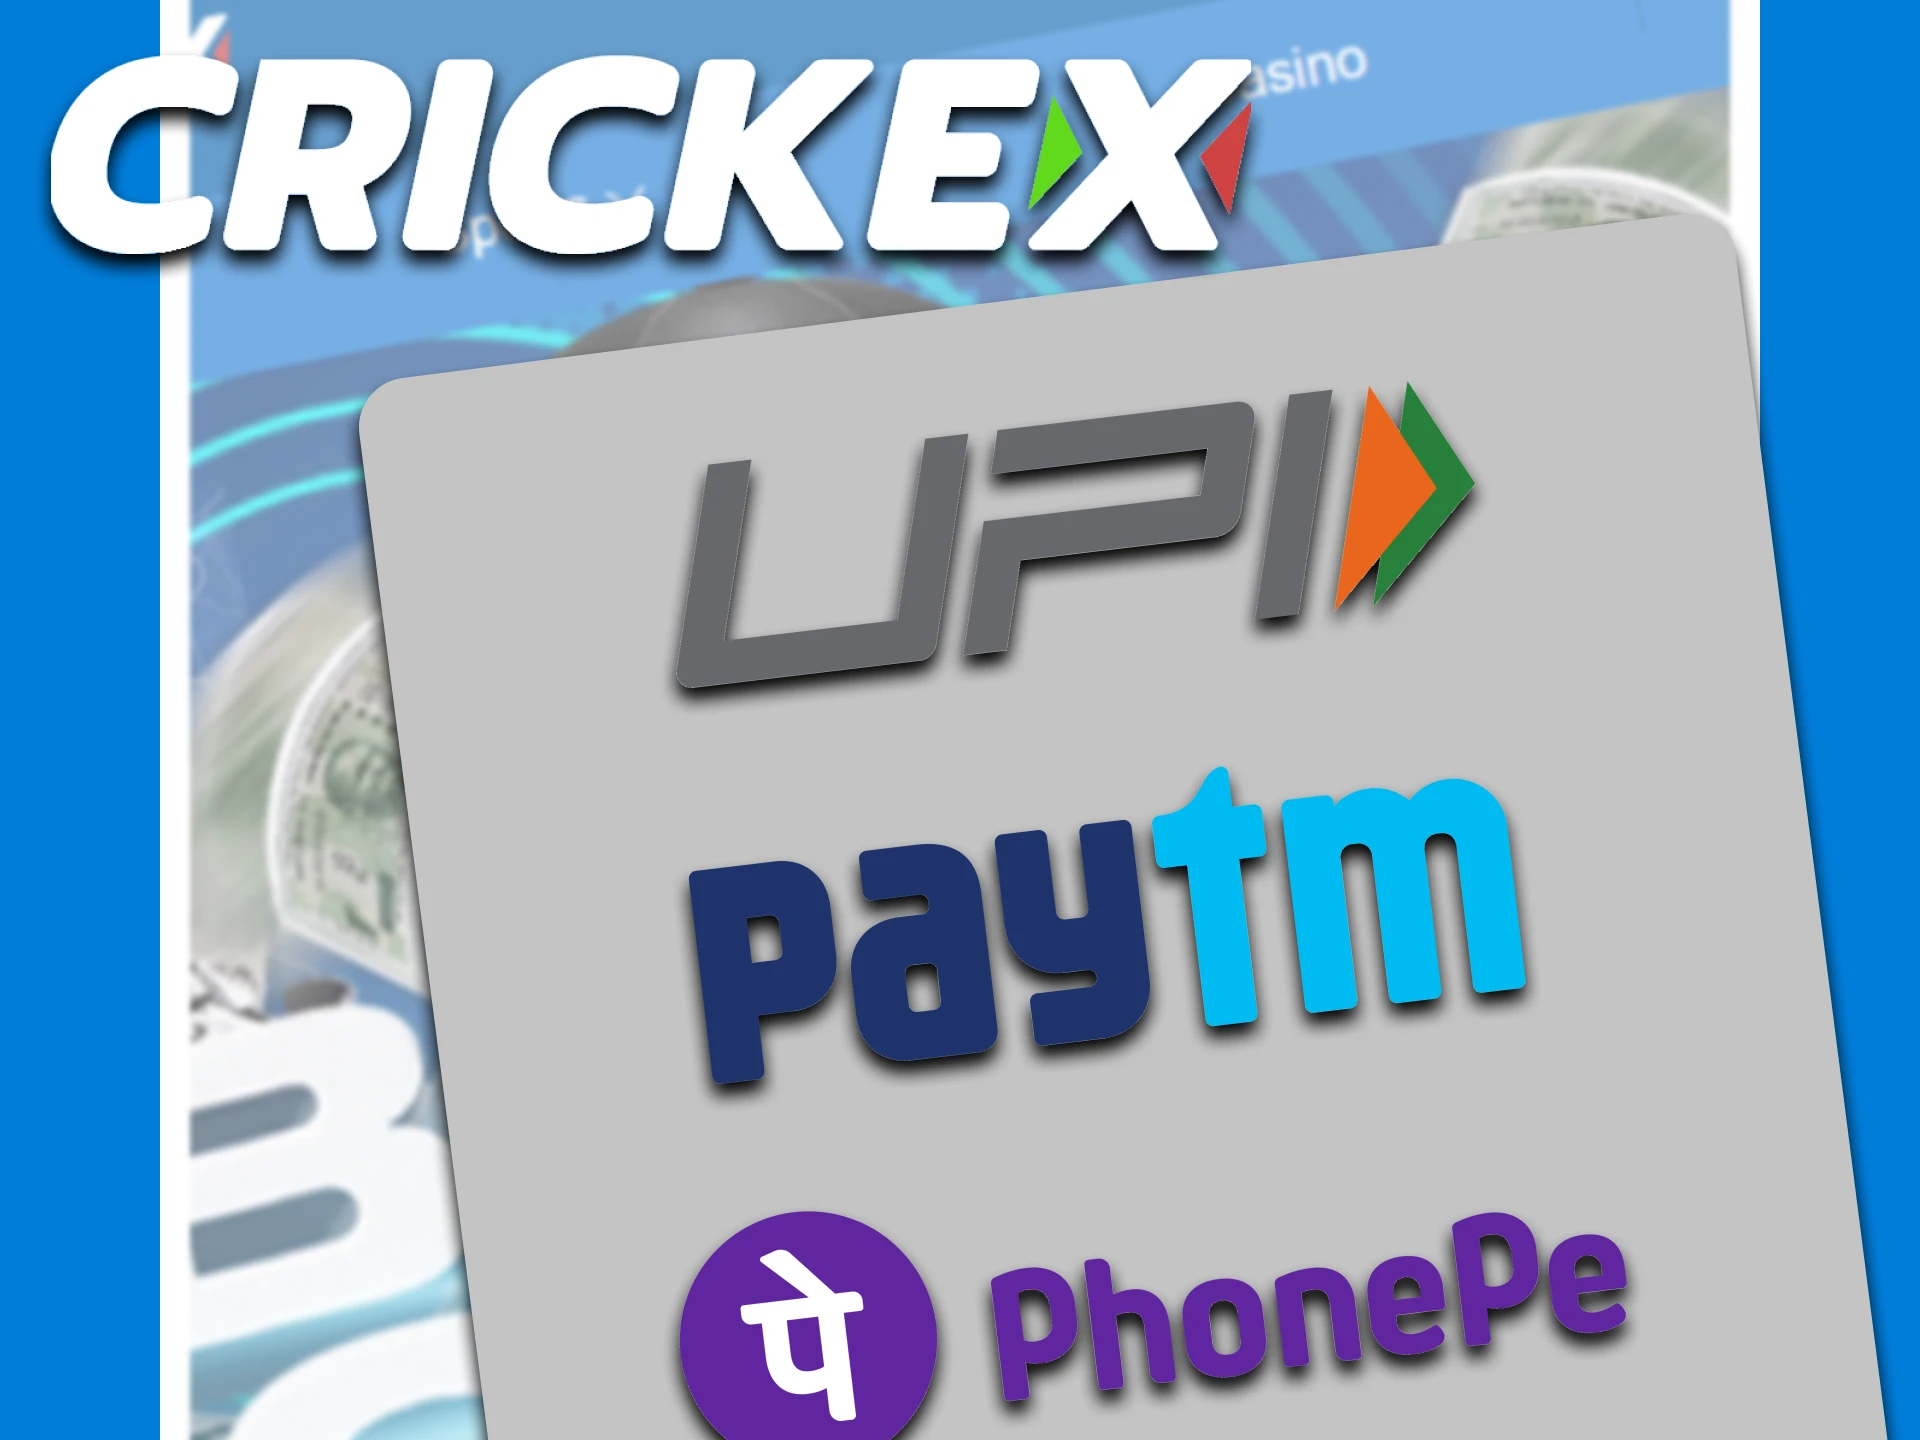 Crickex uses convenient and proven transaction methods.